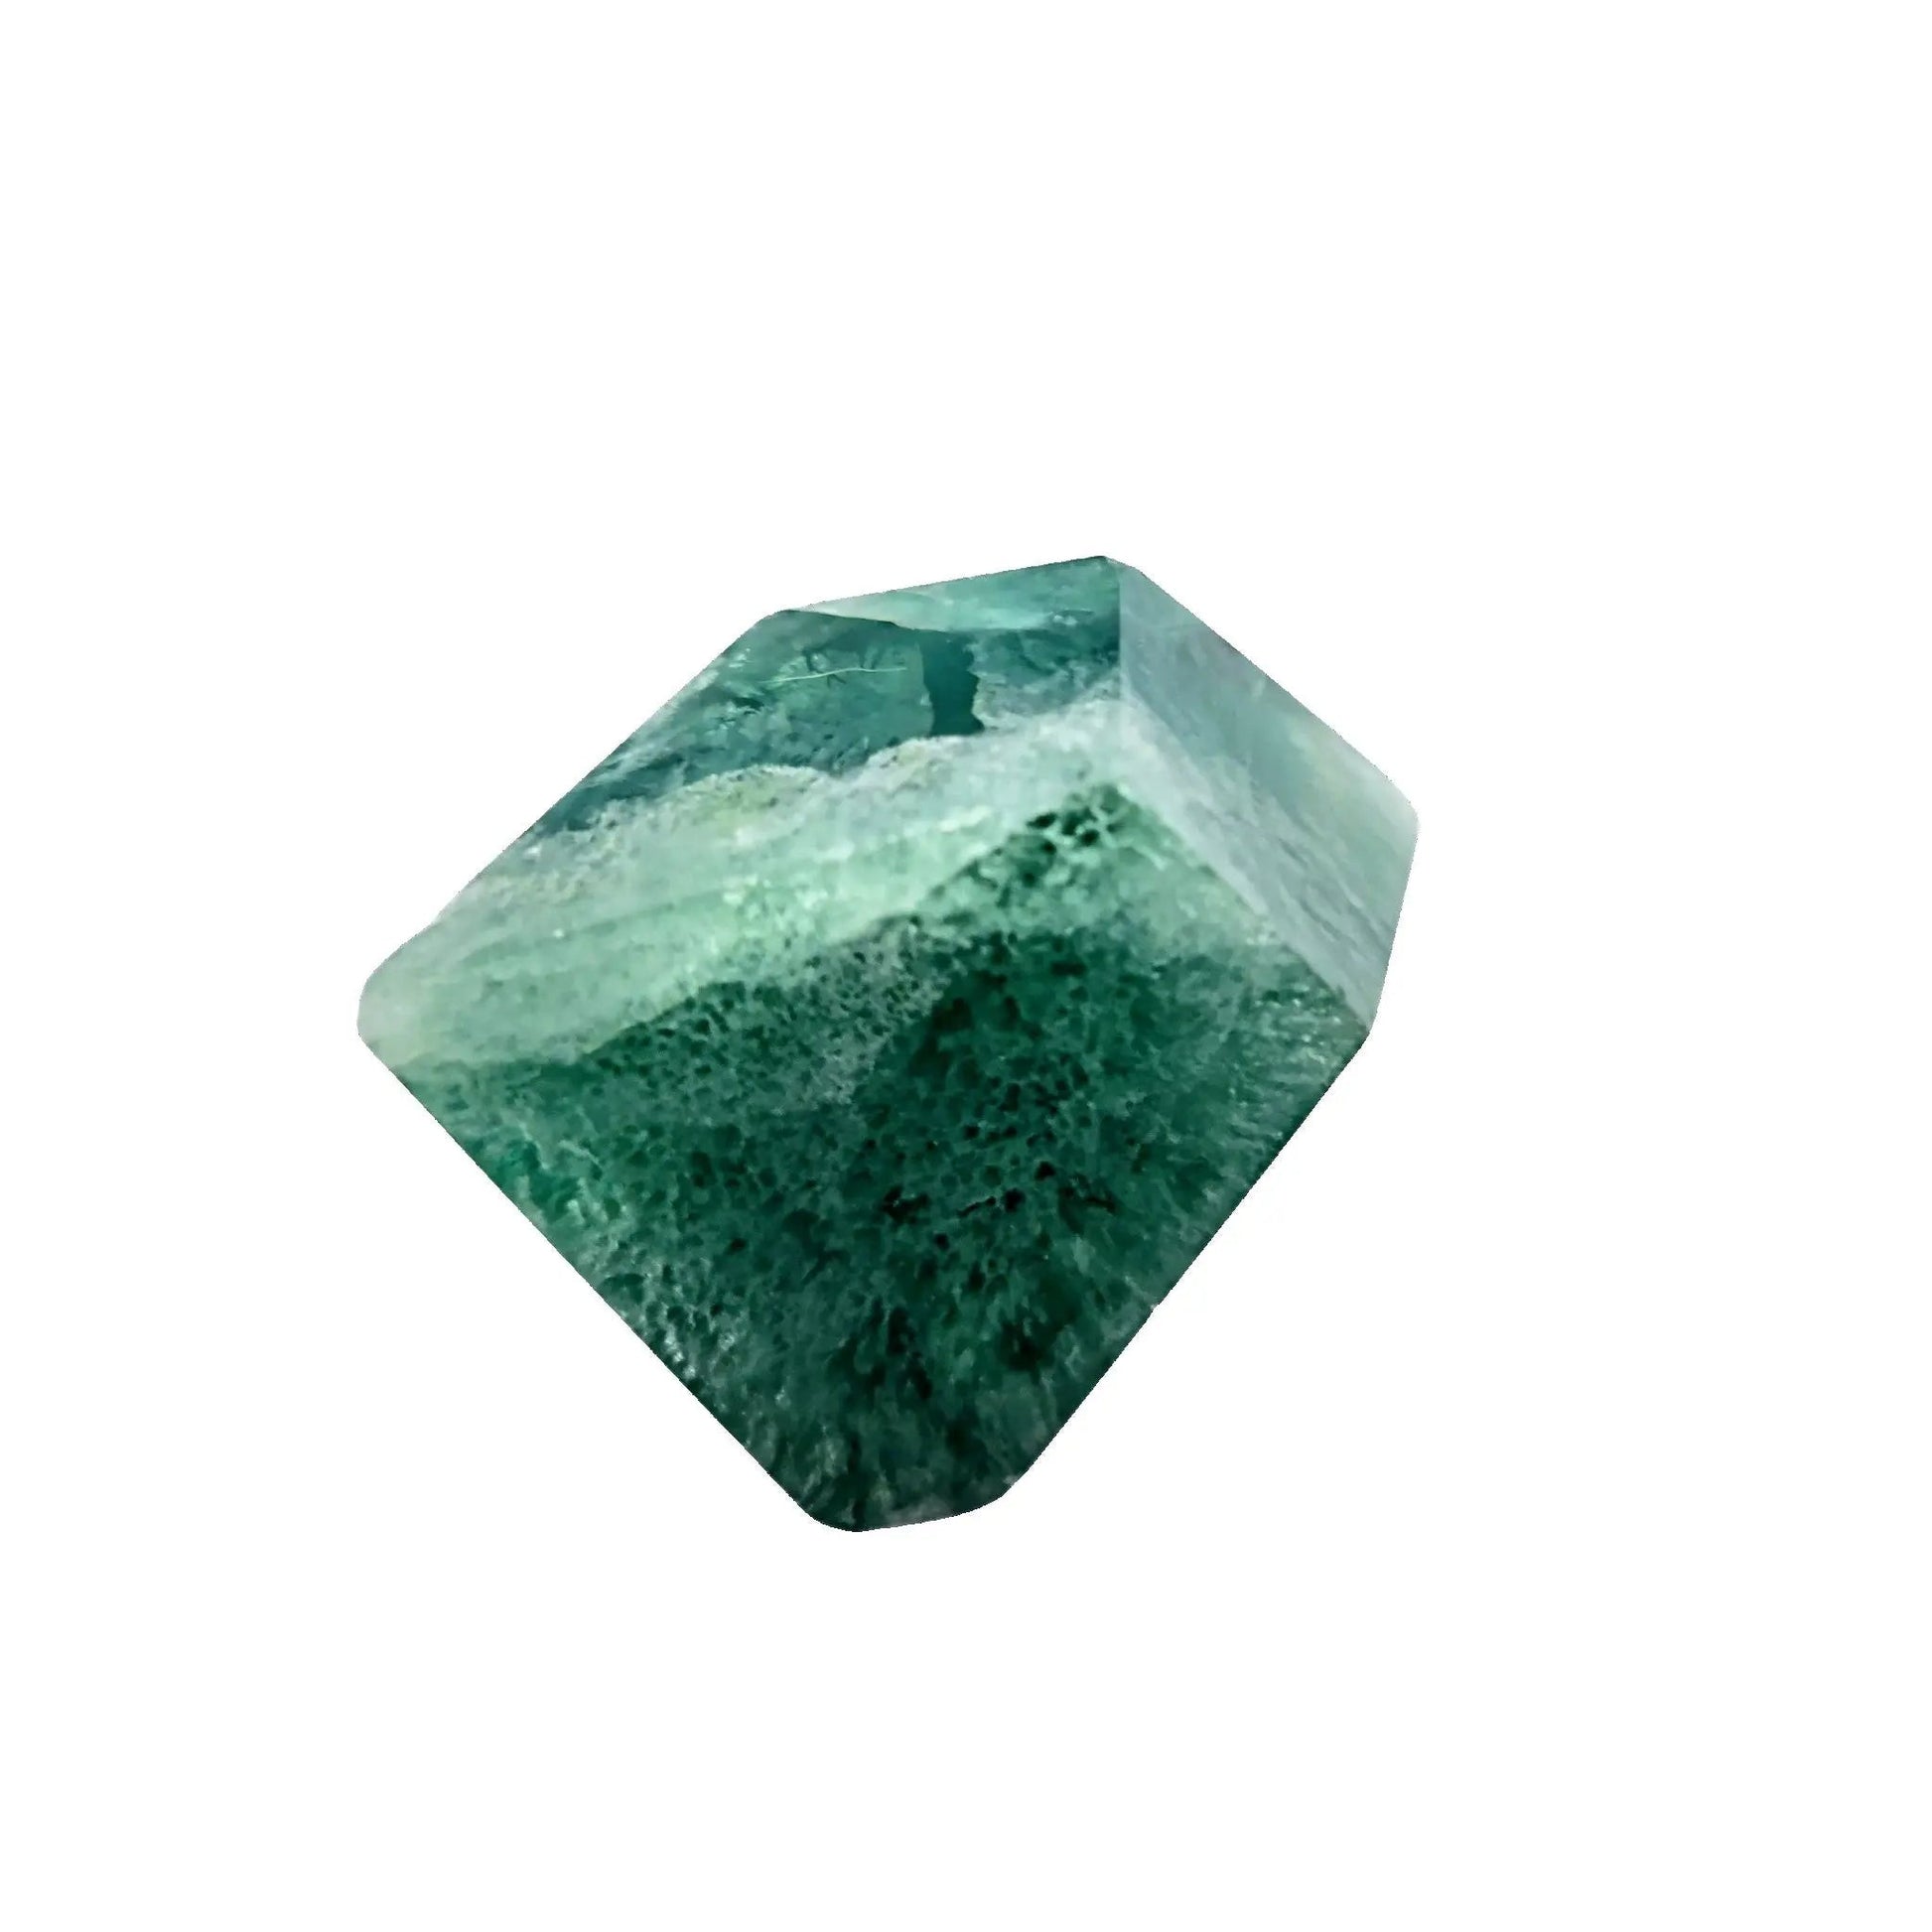 Stone -Specimen -Green Fluorite -Tumbled -Fluorite -Aromes Evasions 